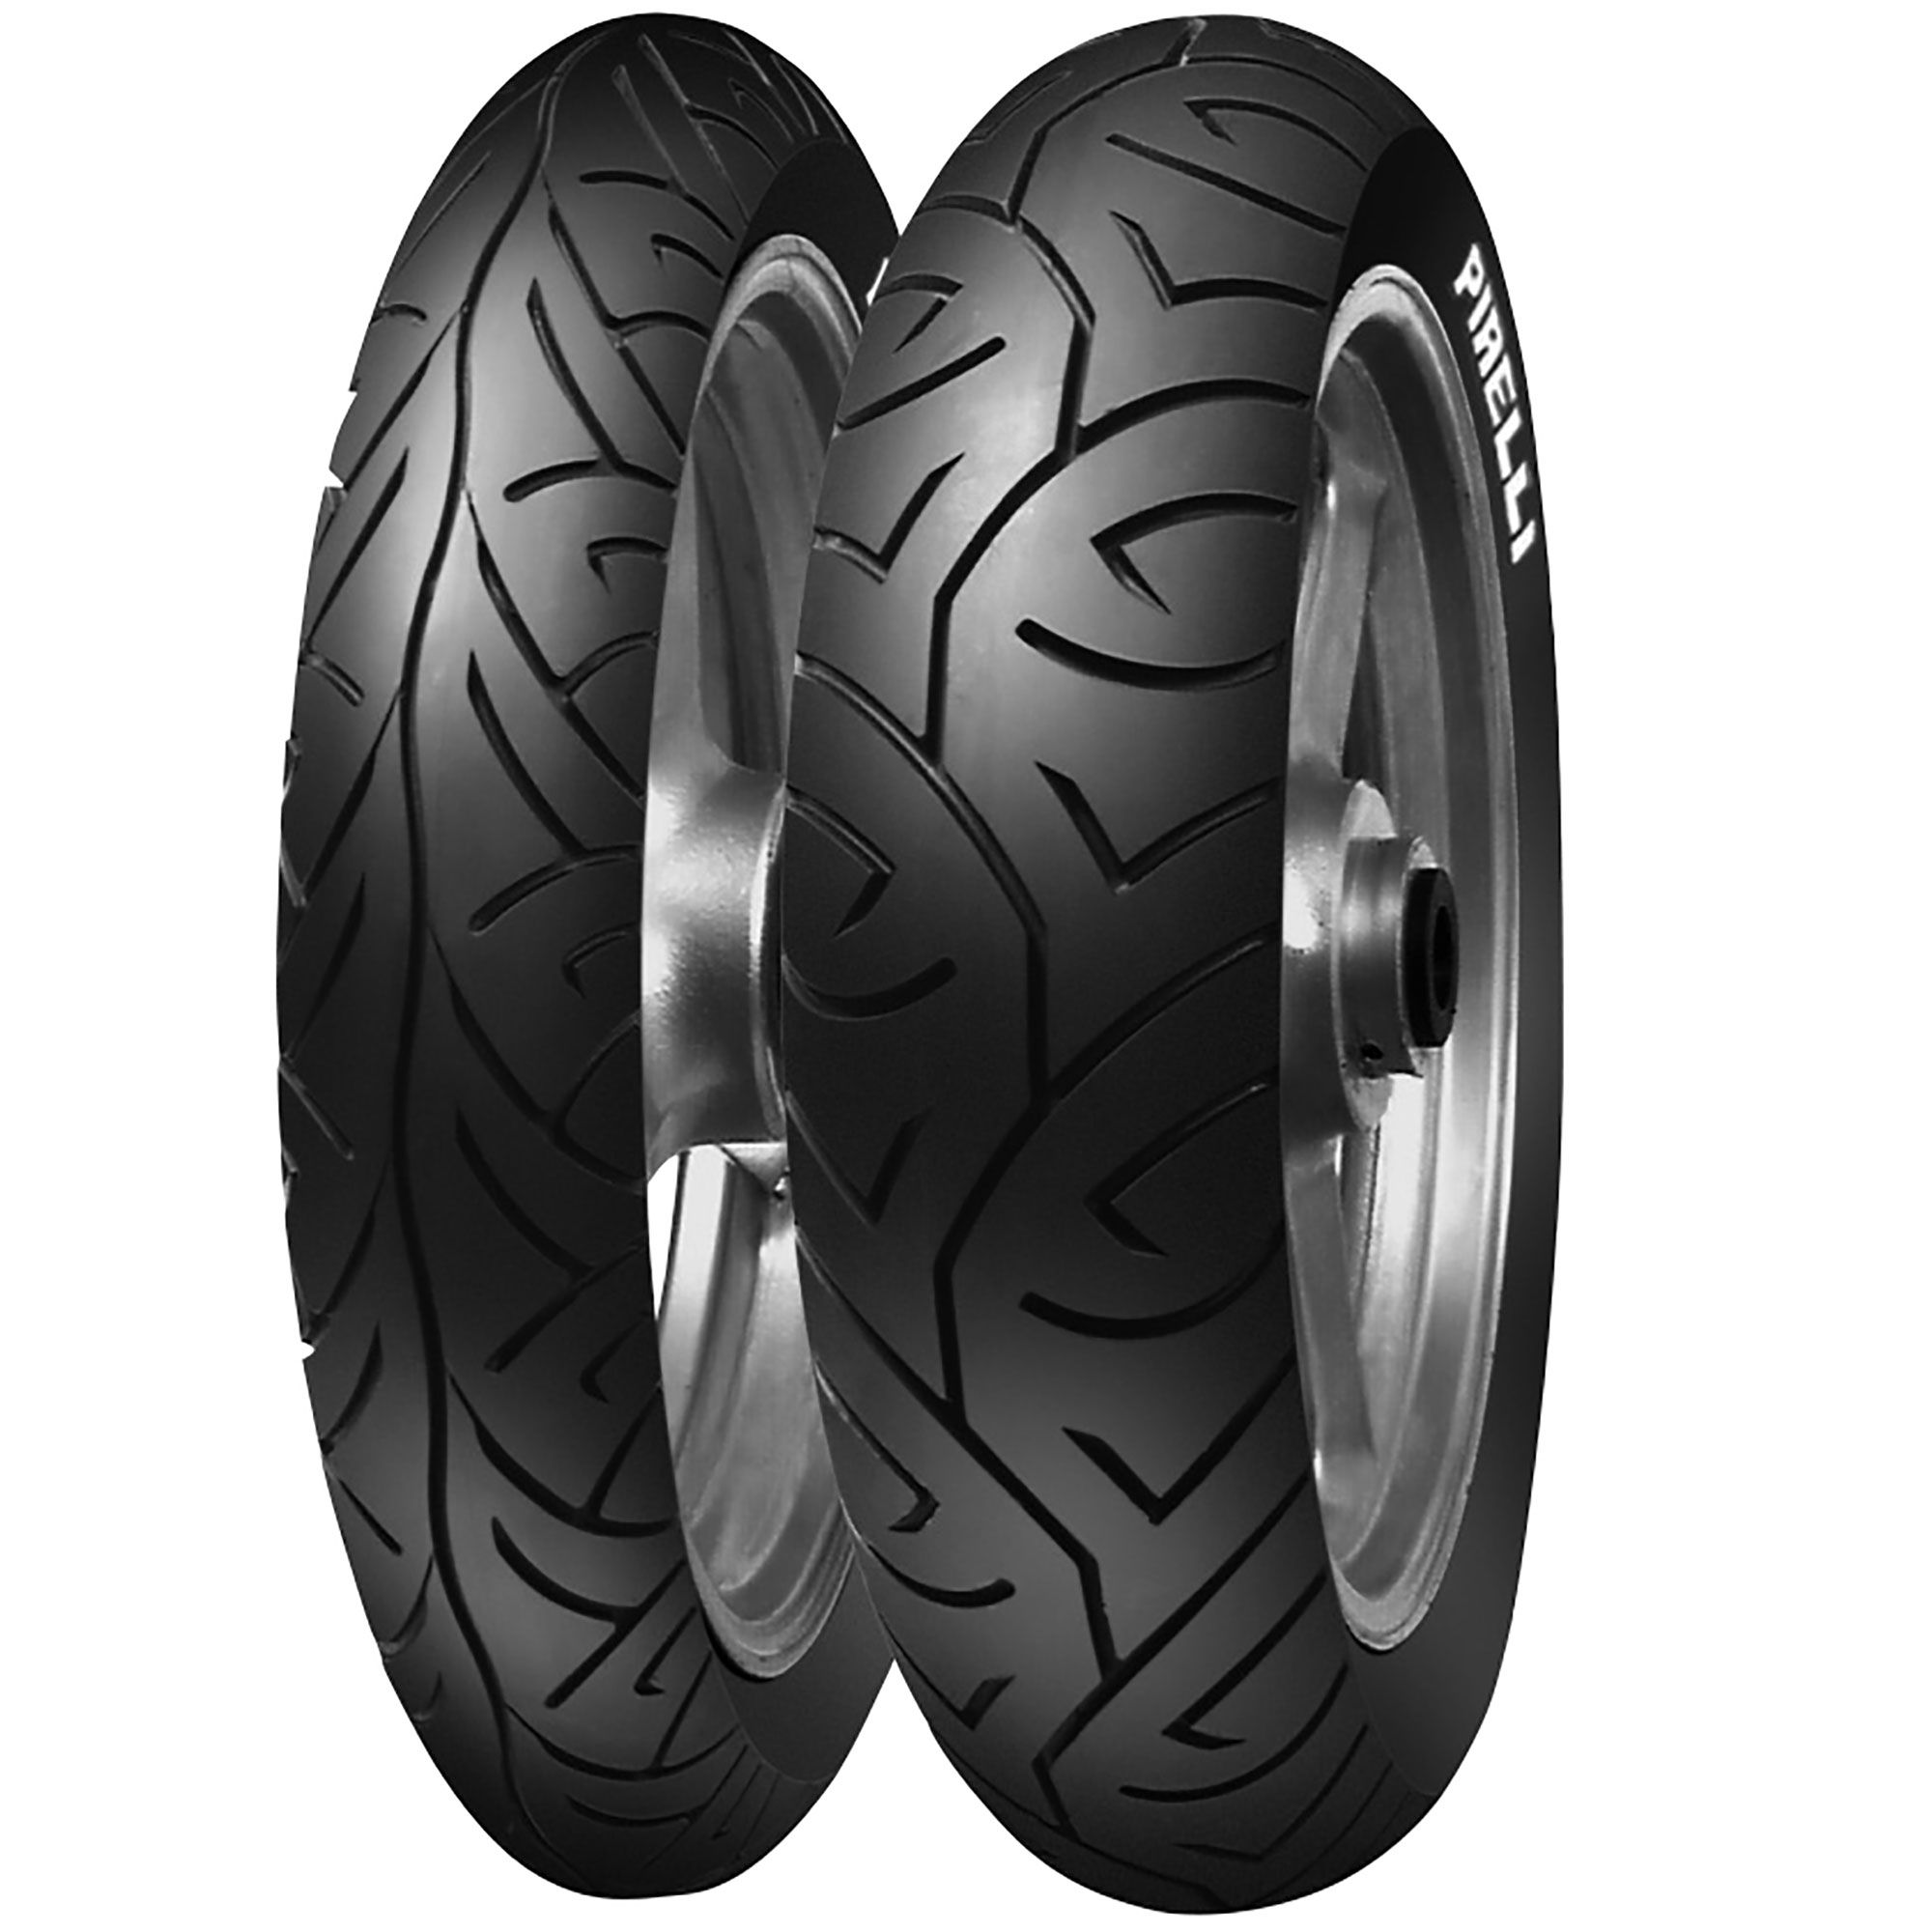 are-pirelli-tires-good-we-explain-the-pros-cons-of-pirelli-tires